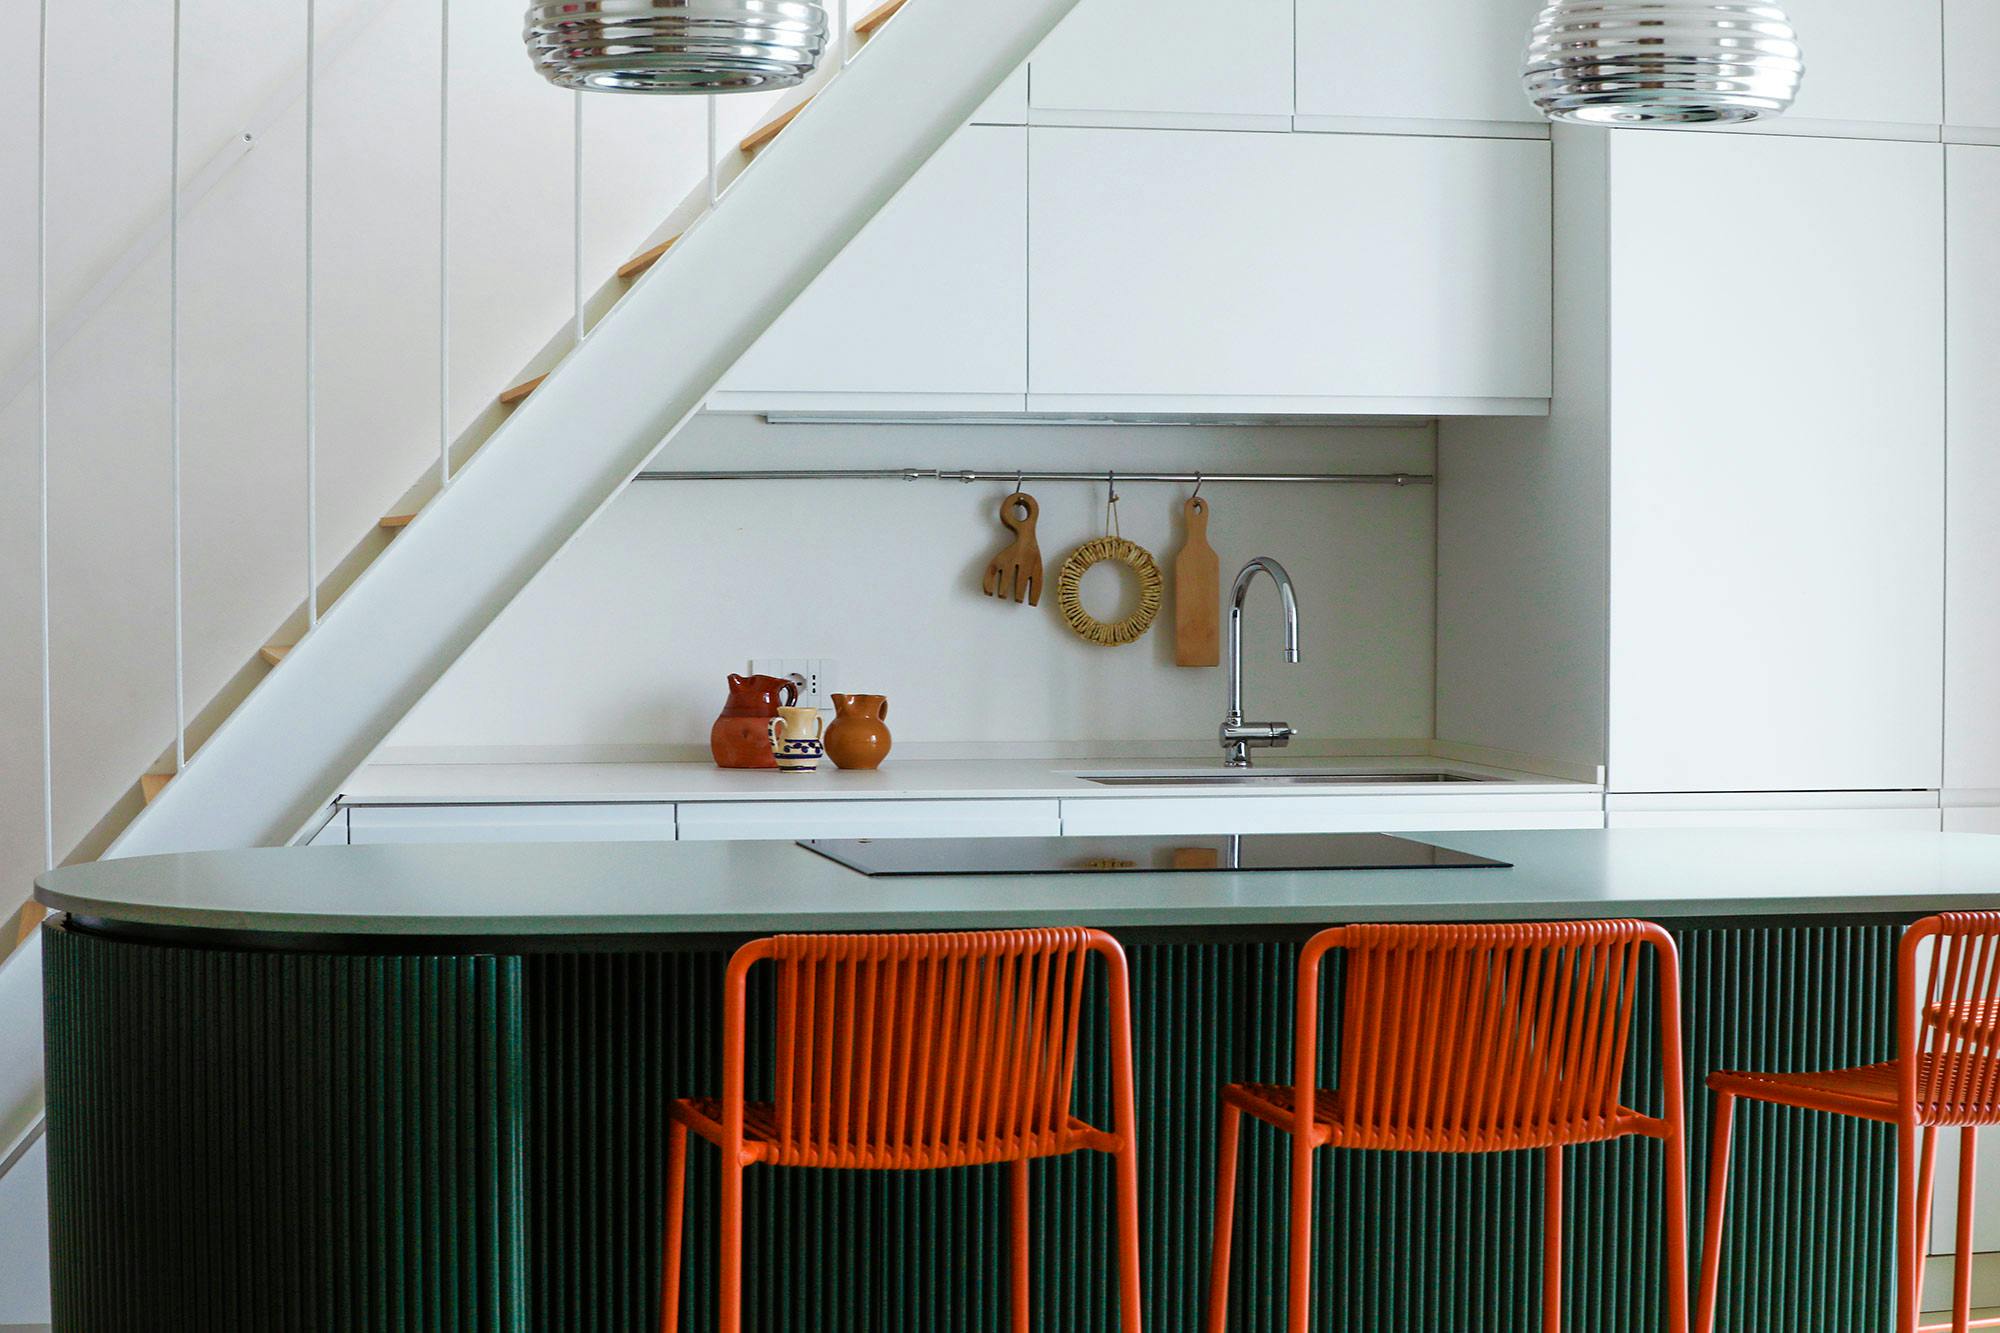 Numero immagine 32 della sezione corrente di {{A functional kitchen under the stairs to make the most of space without compromising on design}} di Cosentino Italia